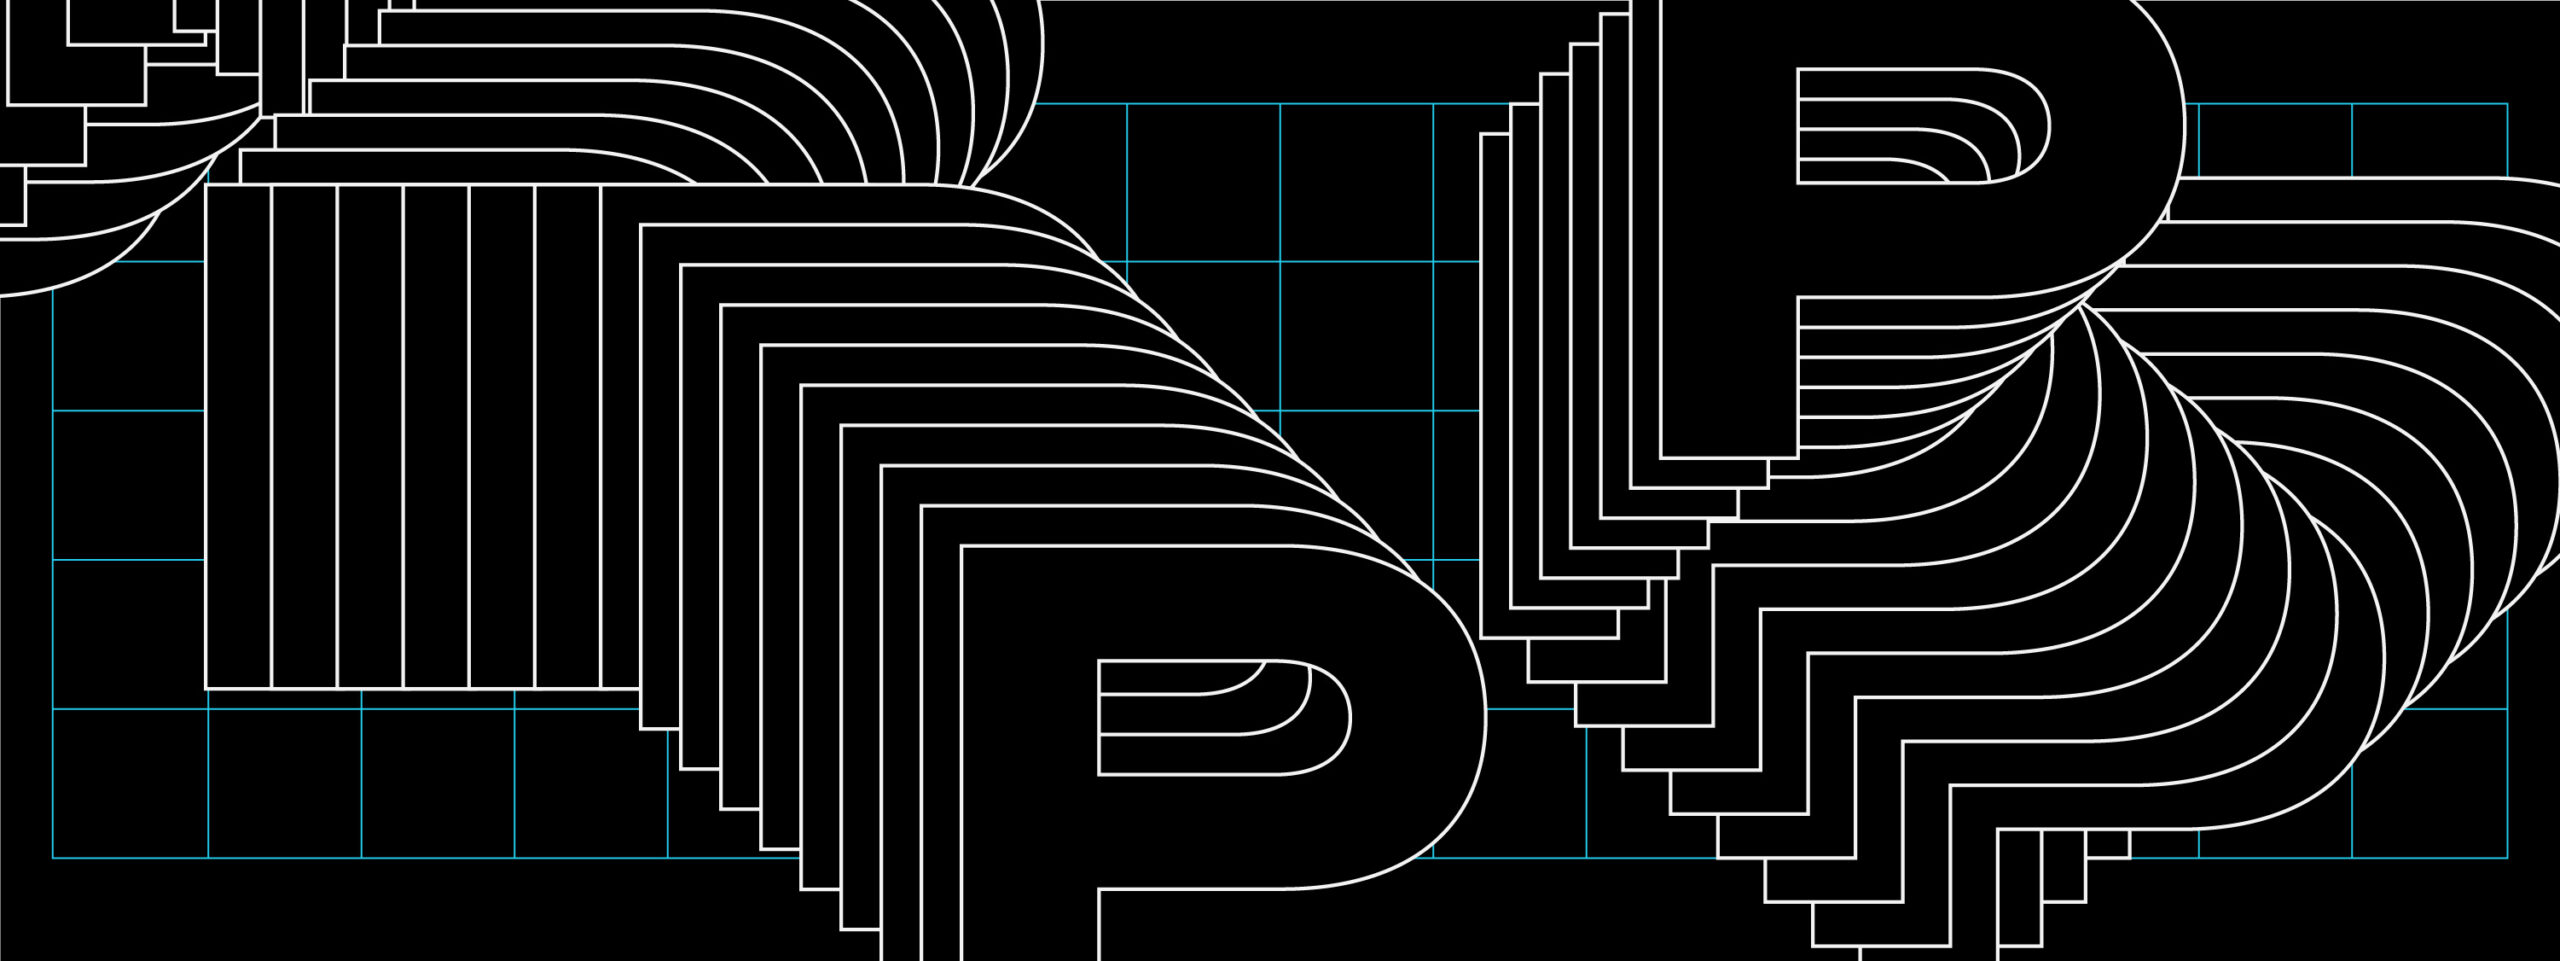 Pixel animation with Pastilla logo